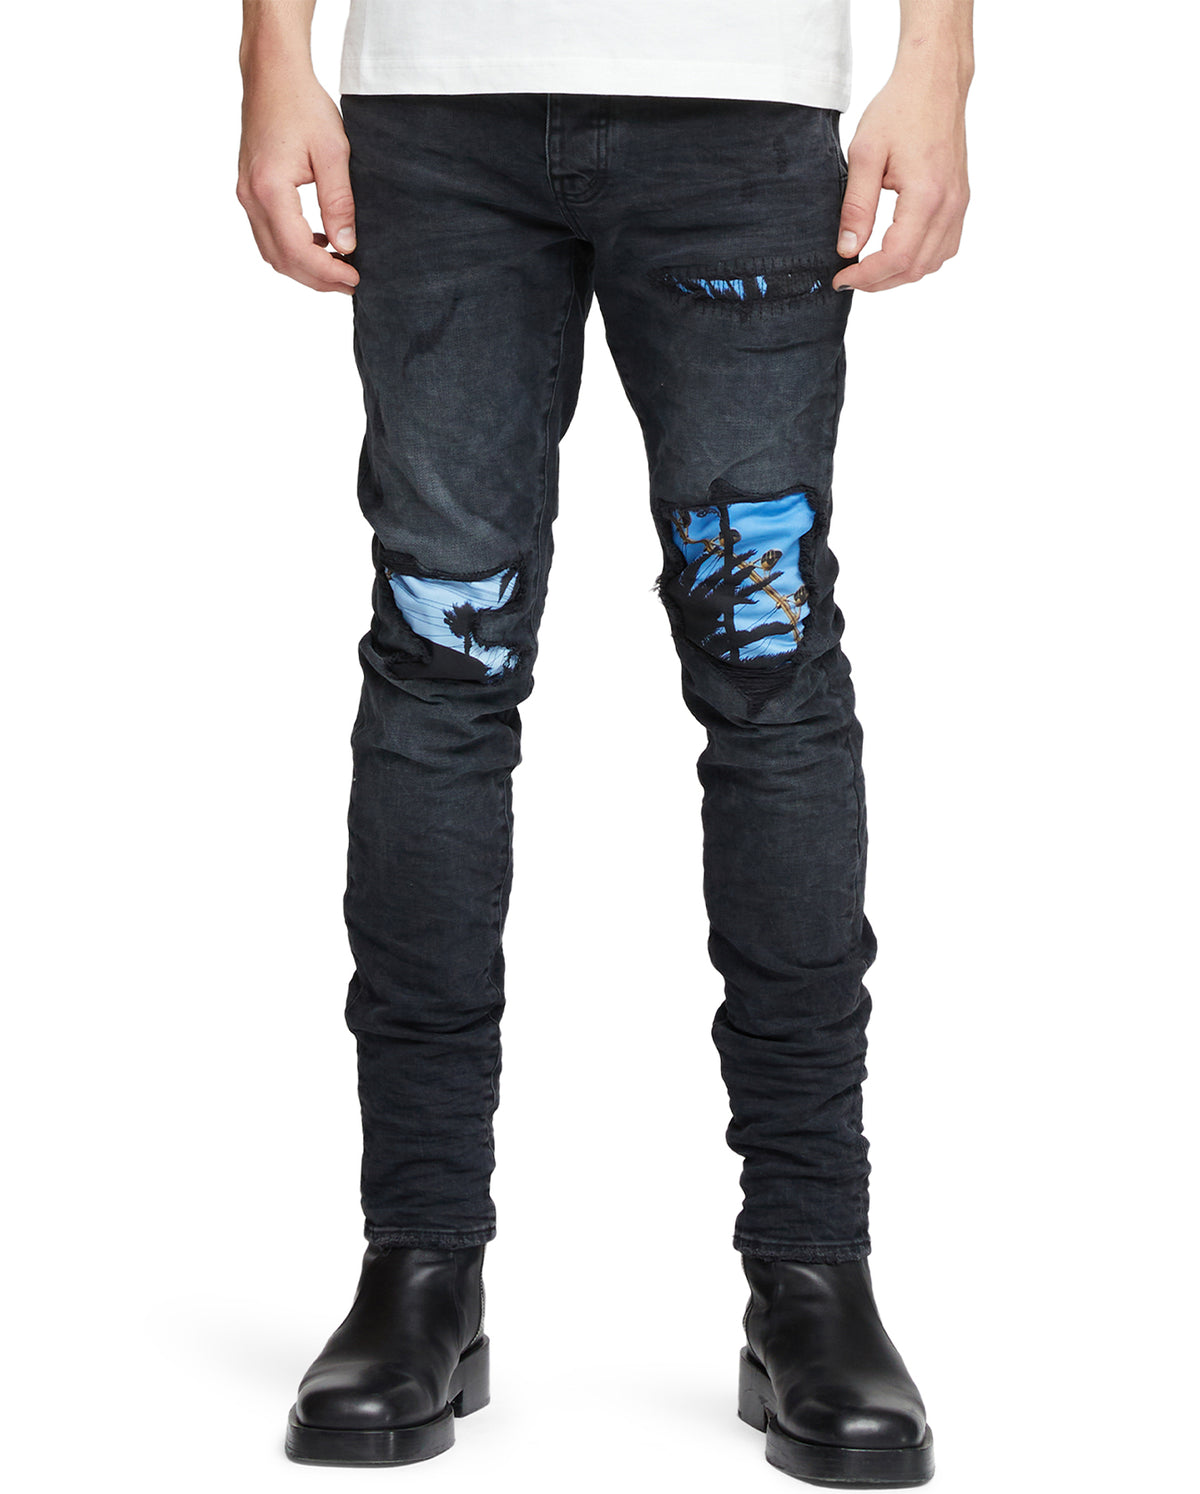 Skinny Jean With Blue Printed Knee Patch - Black